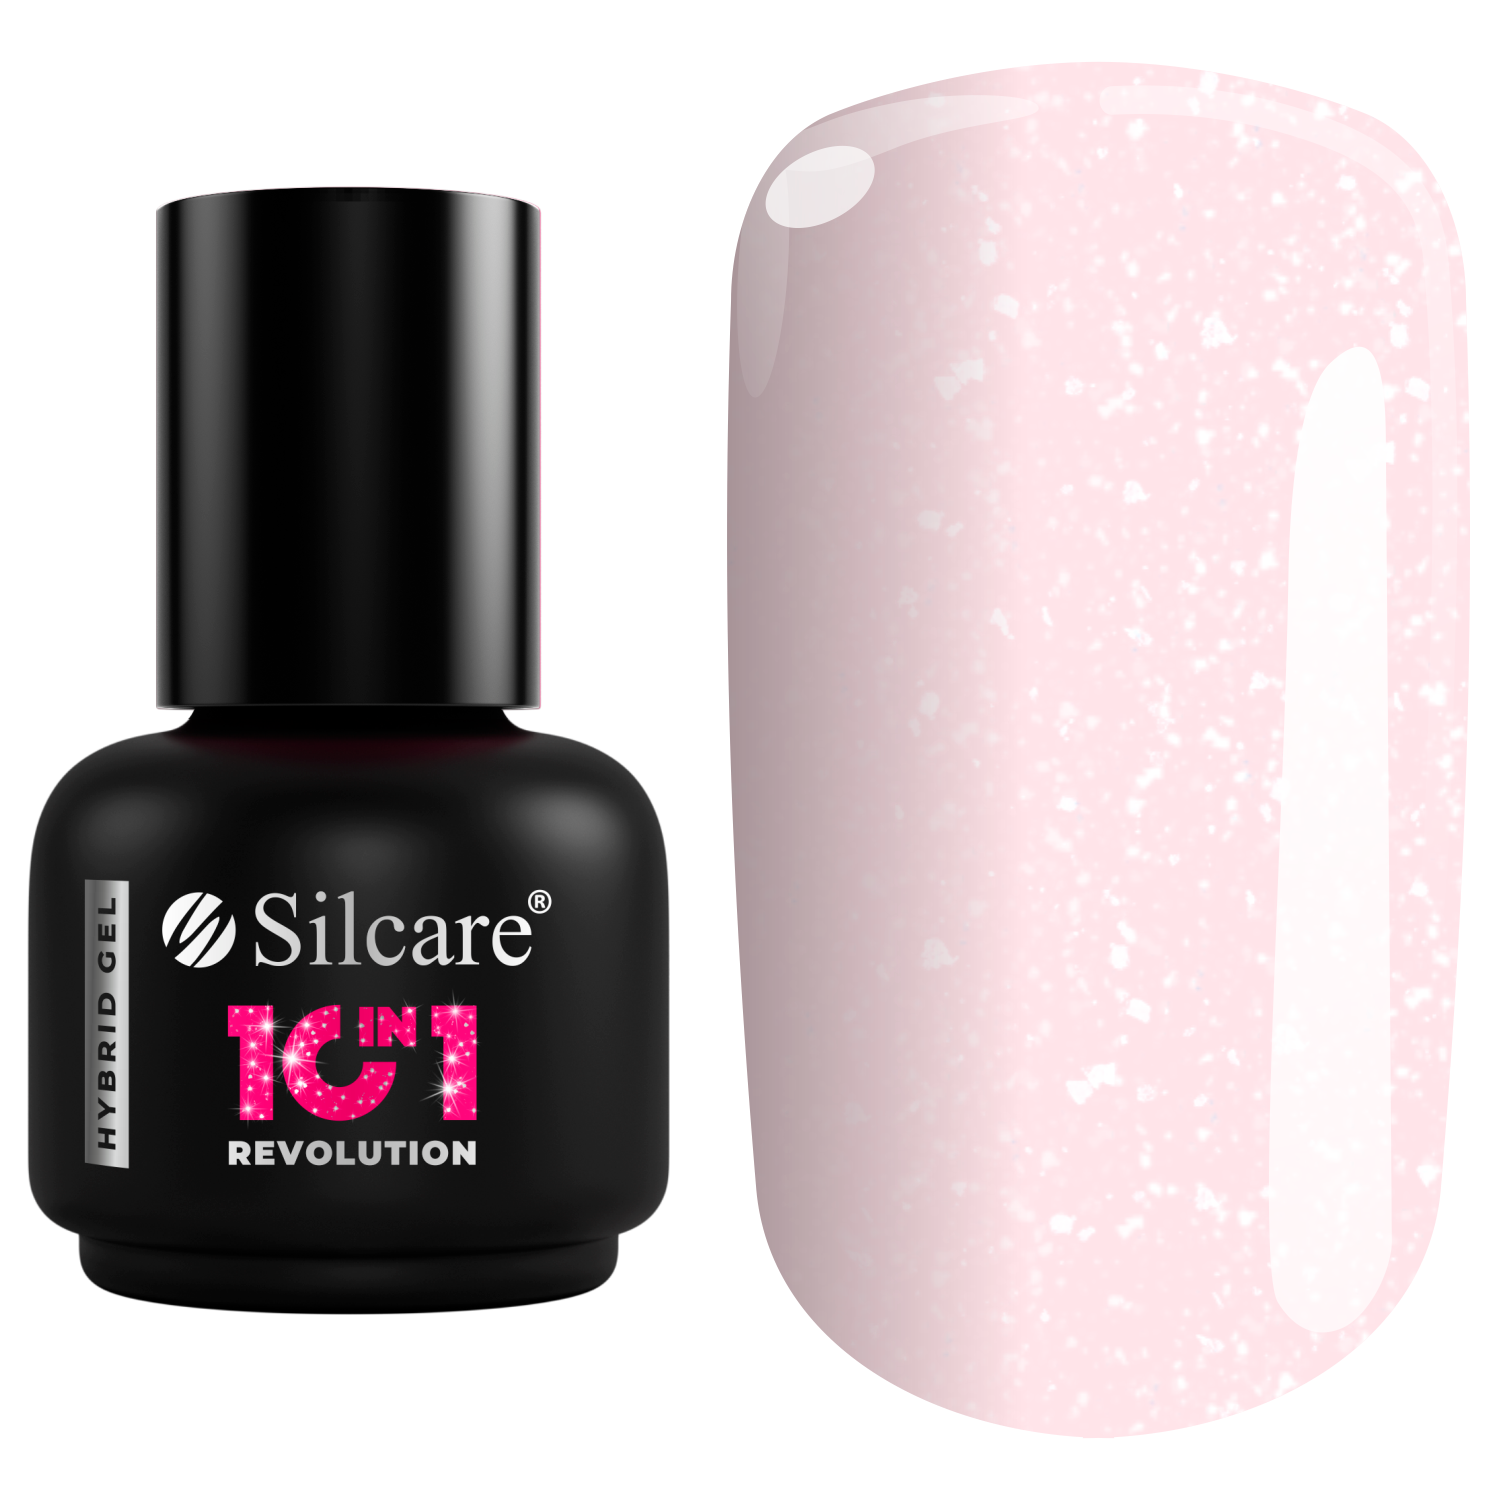 Гибридный лак для ногтей сверкающий розовый Silcare 10In1, 15 мл